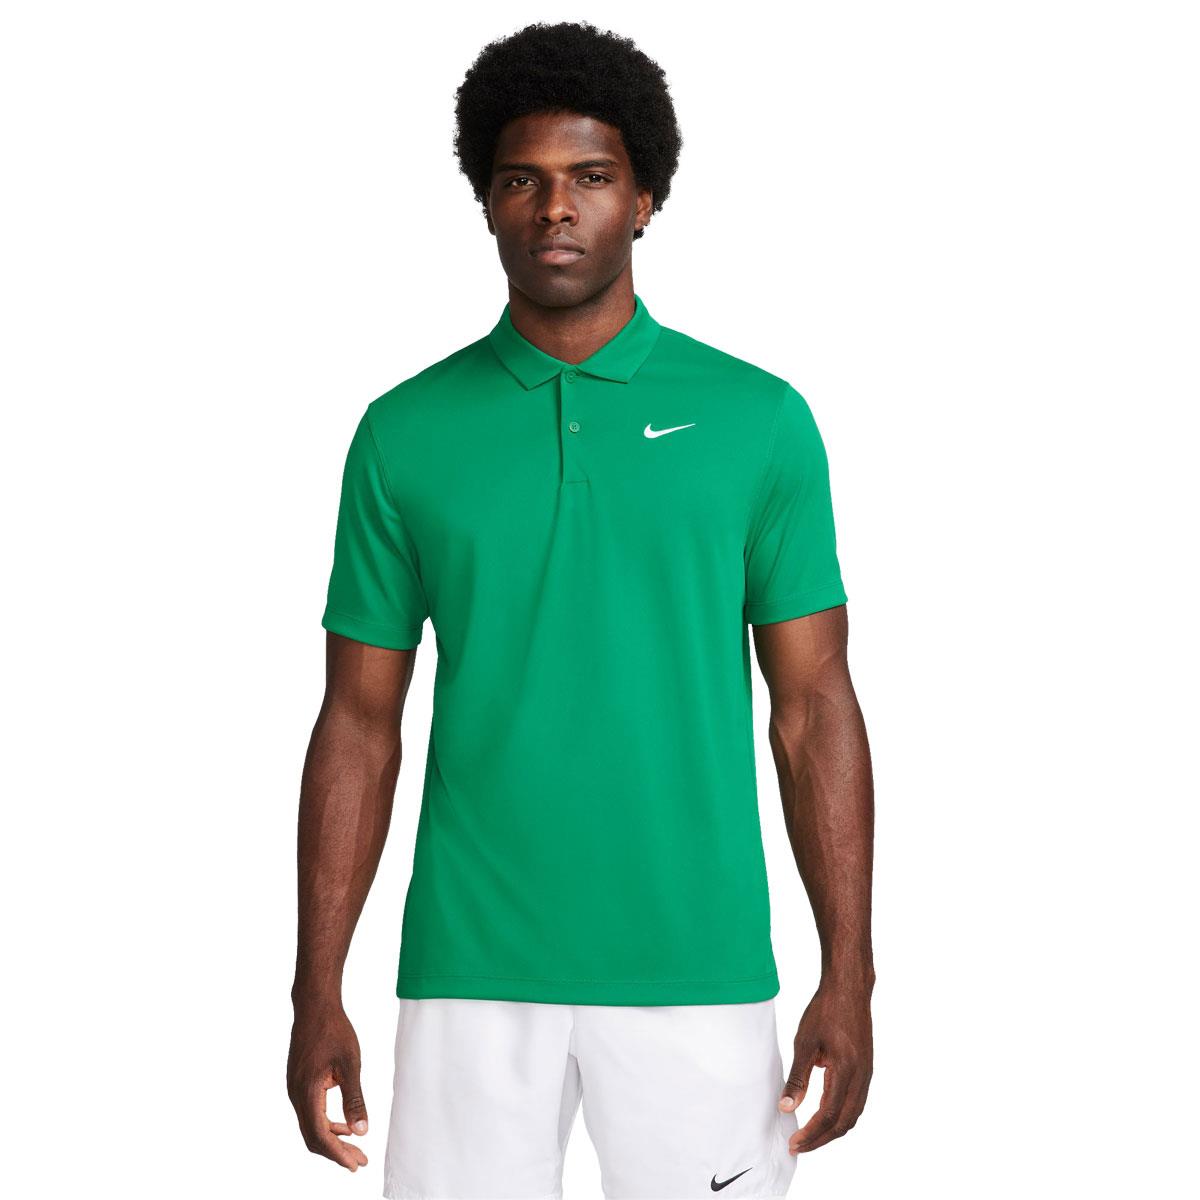 NikeCourt Mens Dri-FIT Tennis Polo Green XL